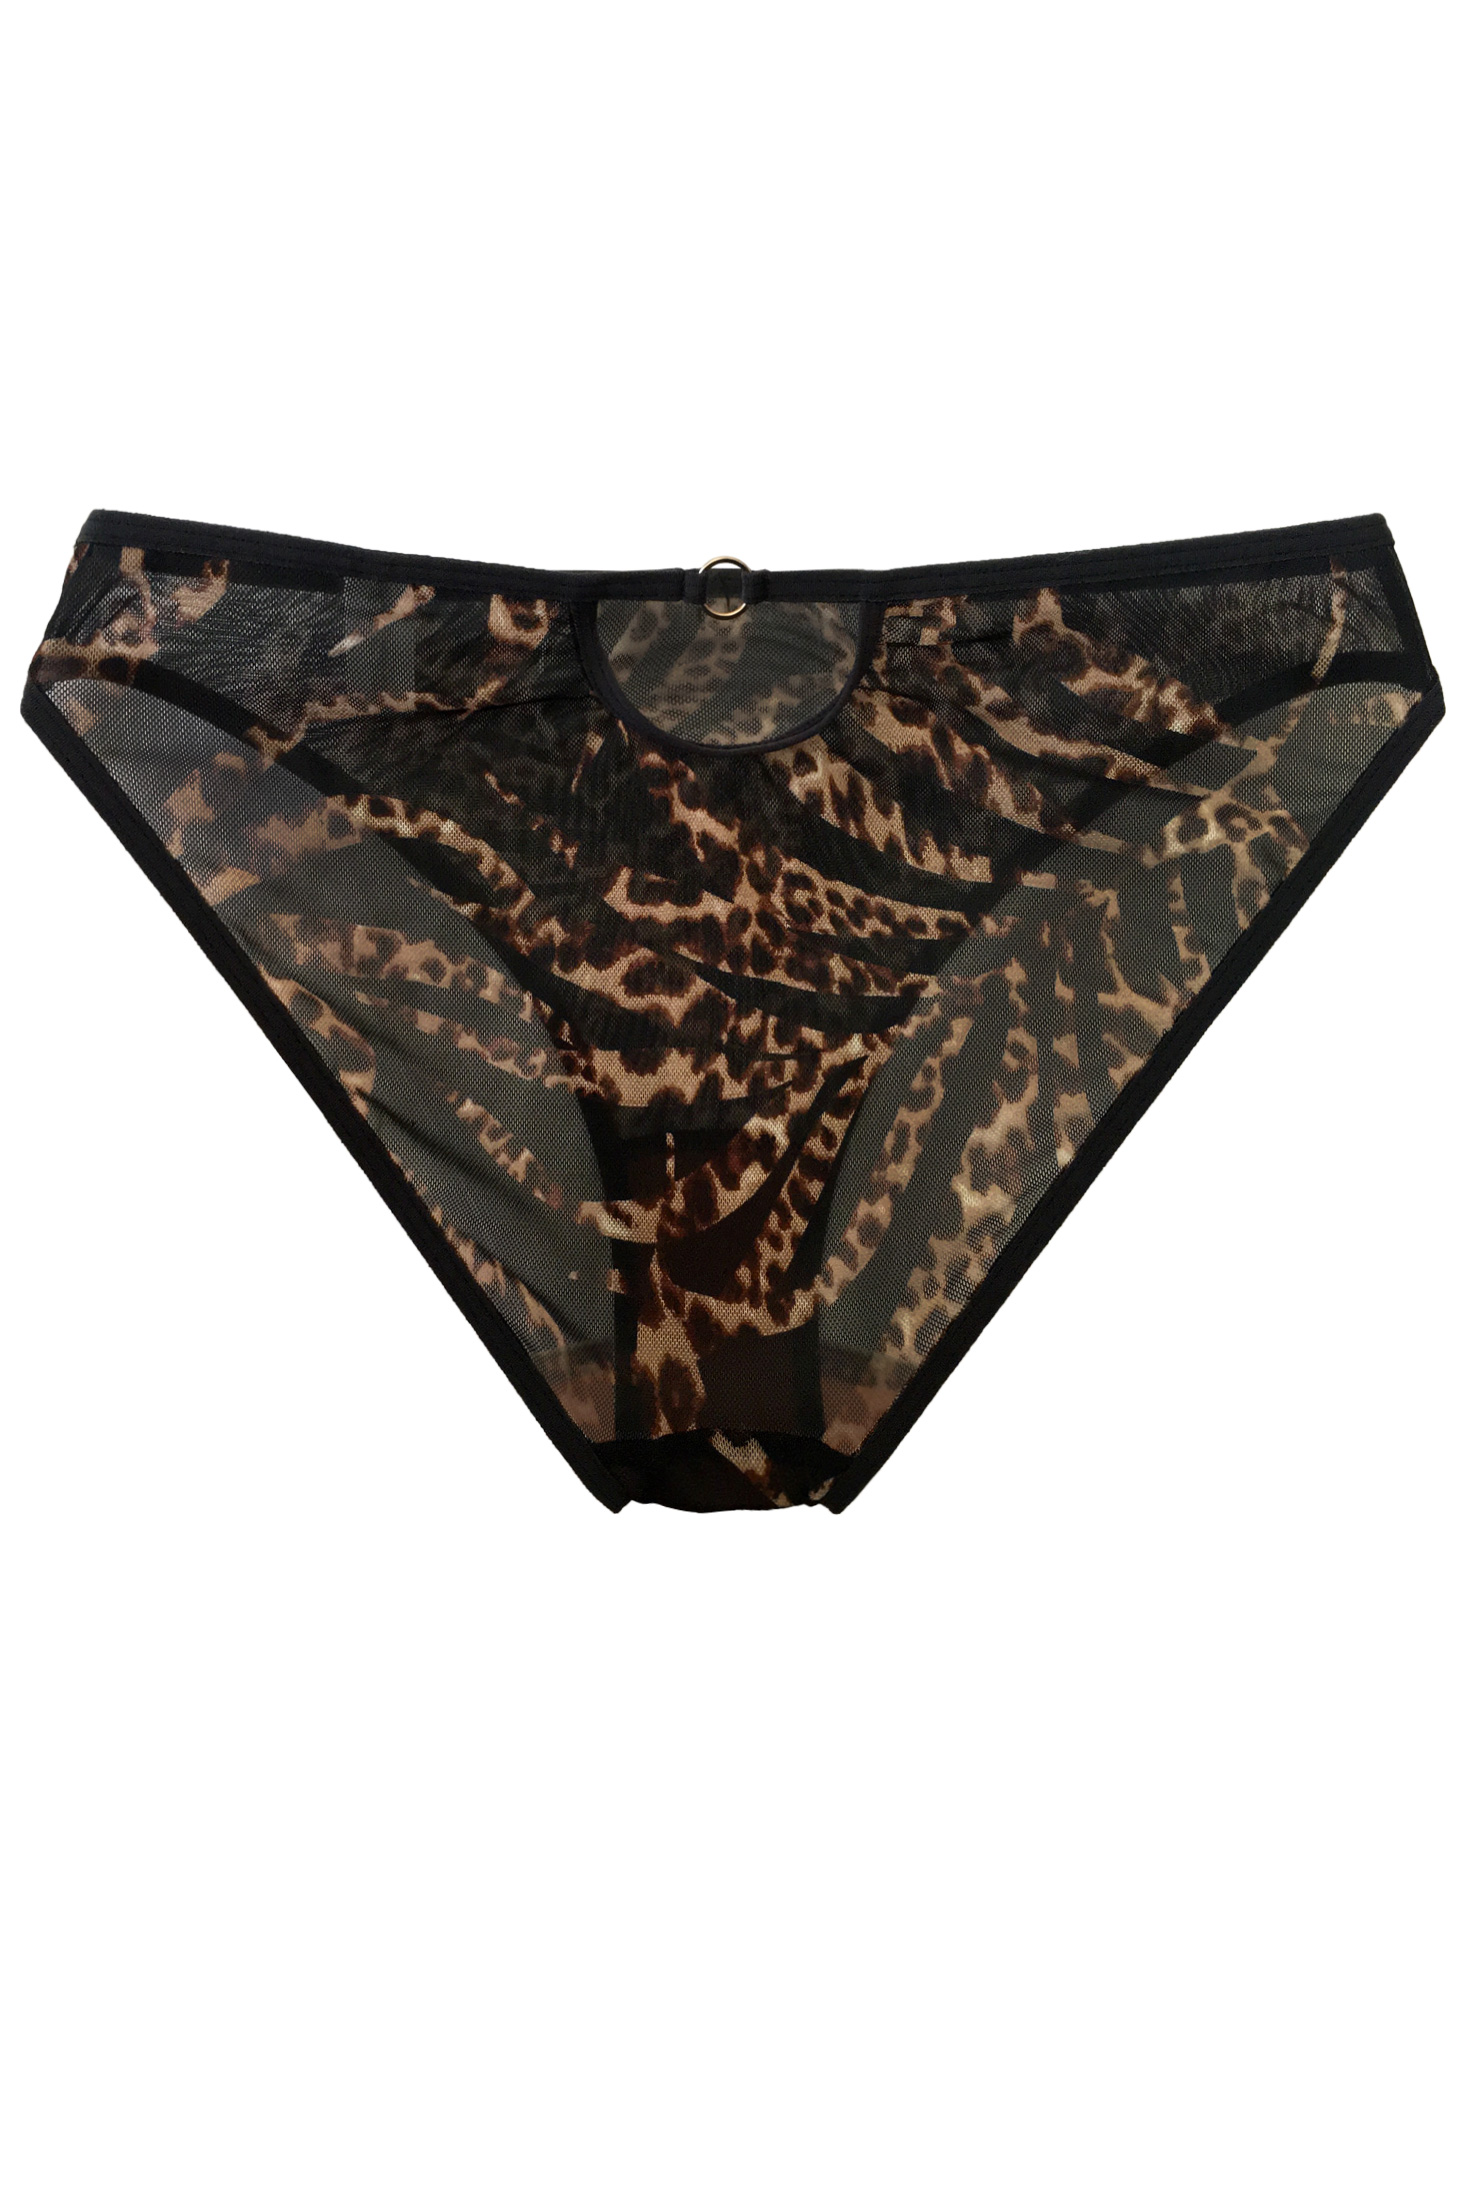 Lingerie Letters Leopard Brief - Women's Underwear Online